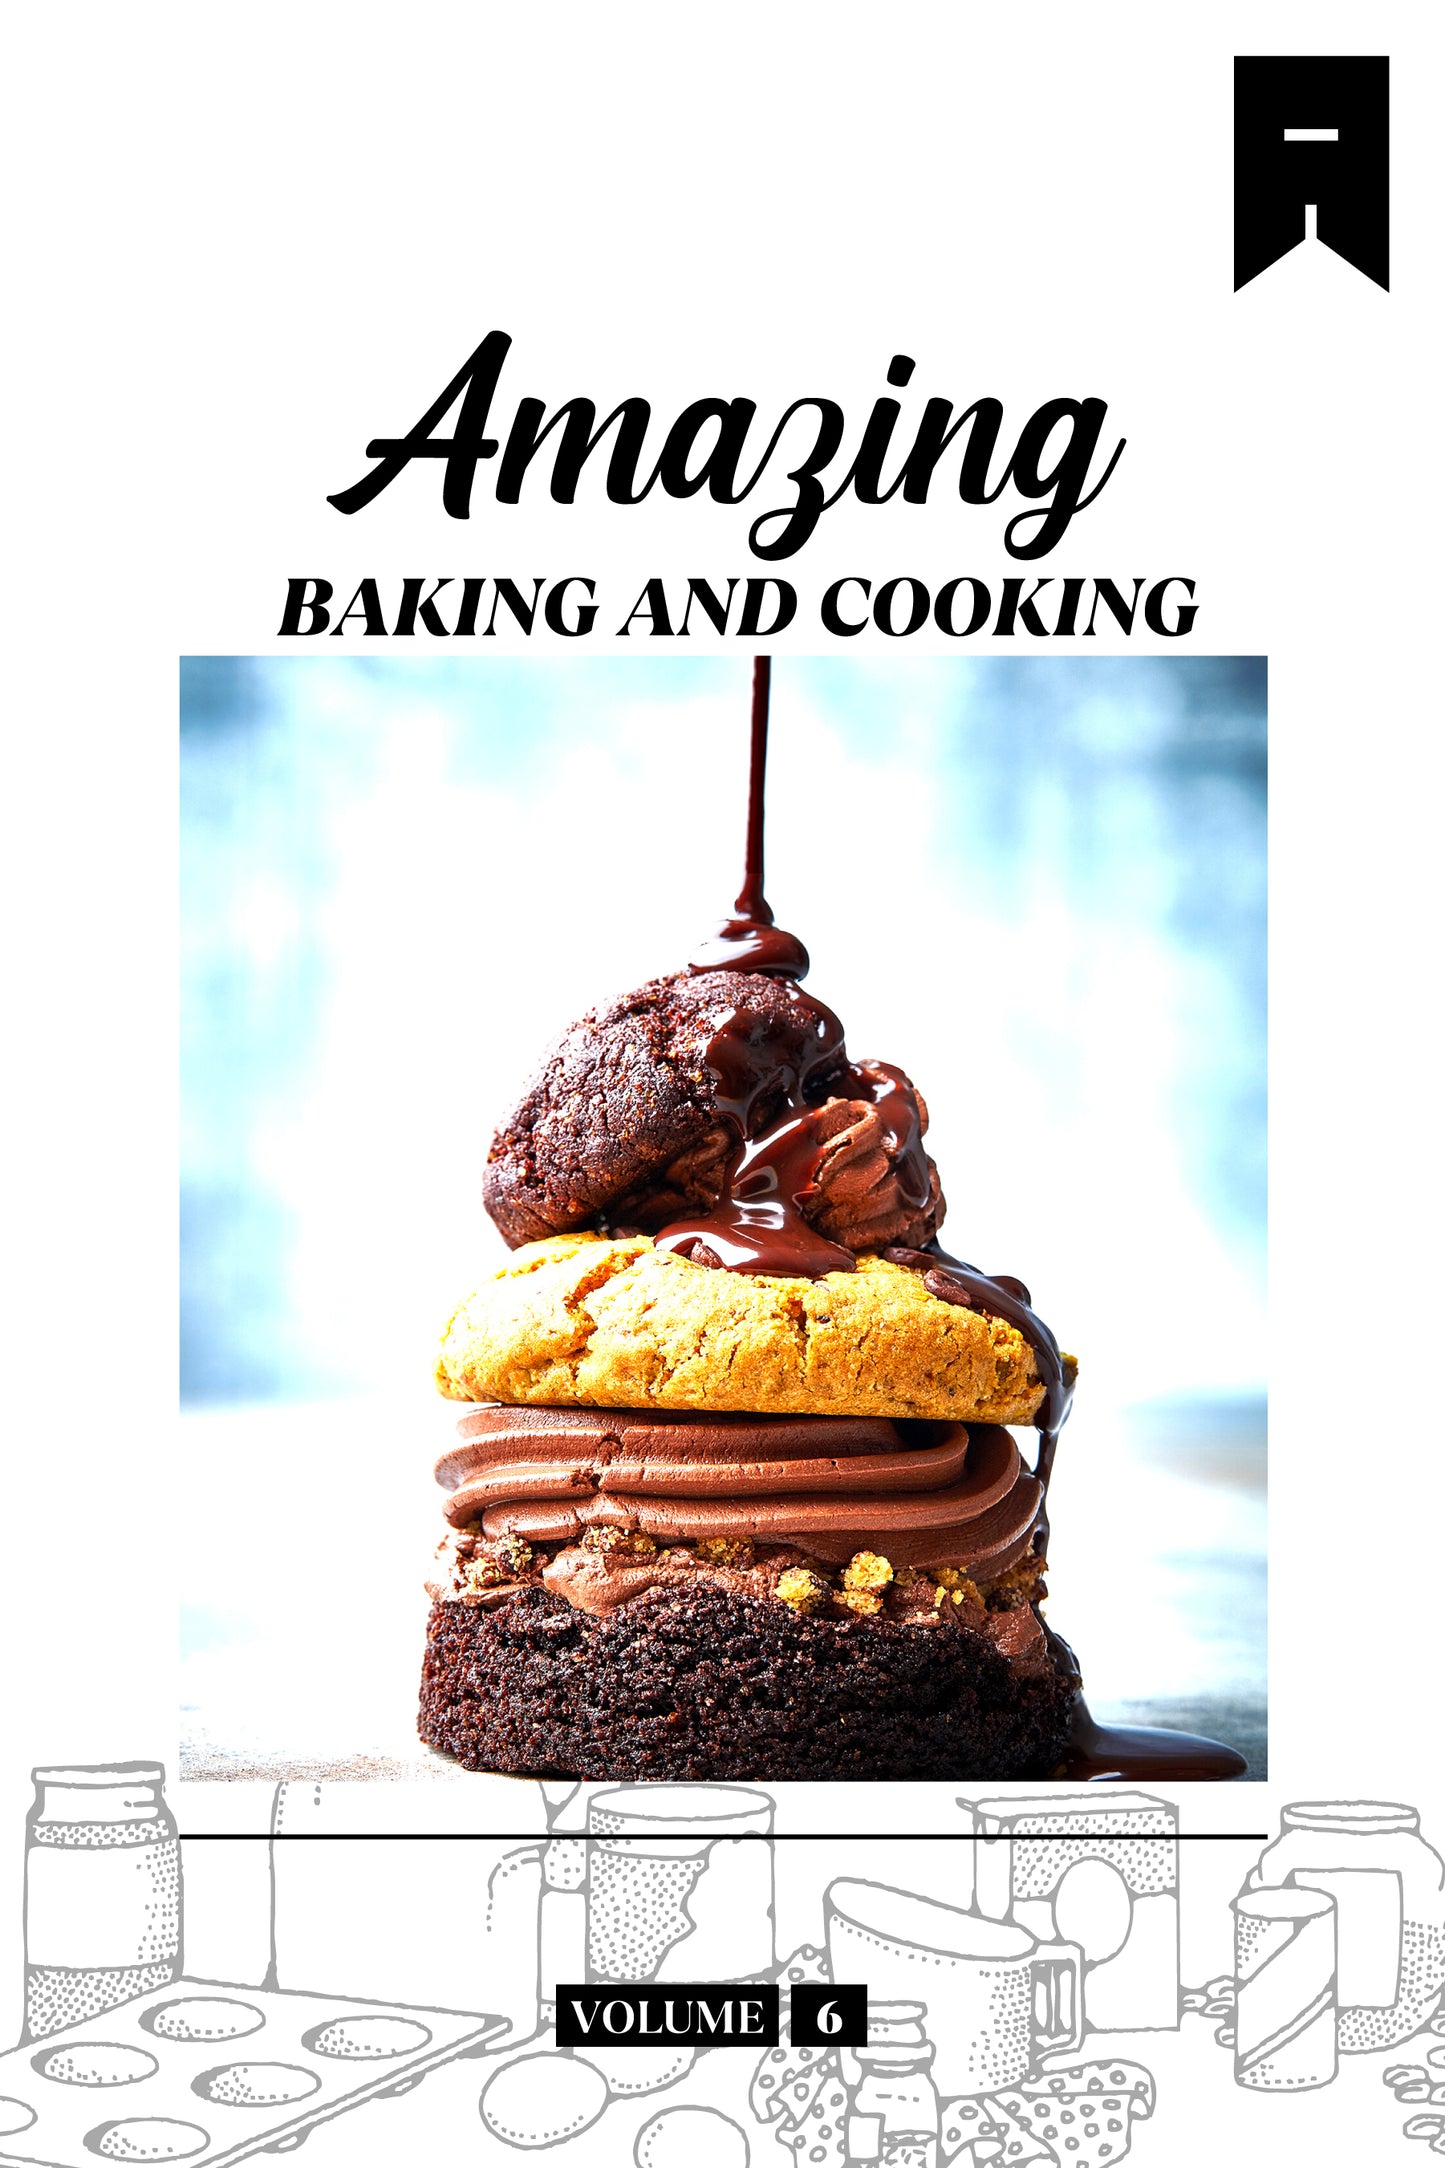 Amazing Baking (Volume 6) - Physical Book